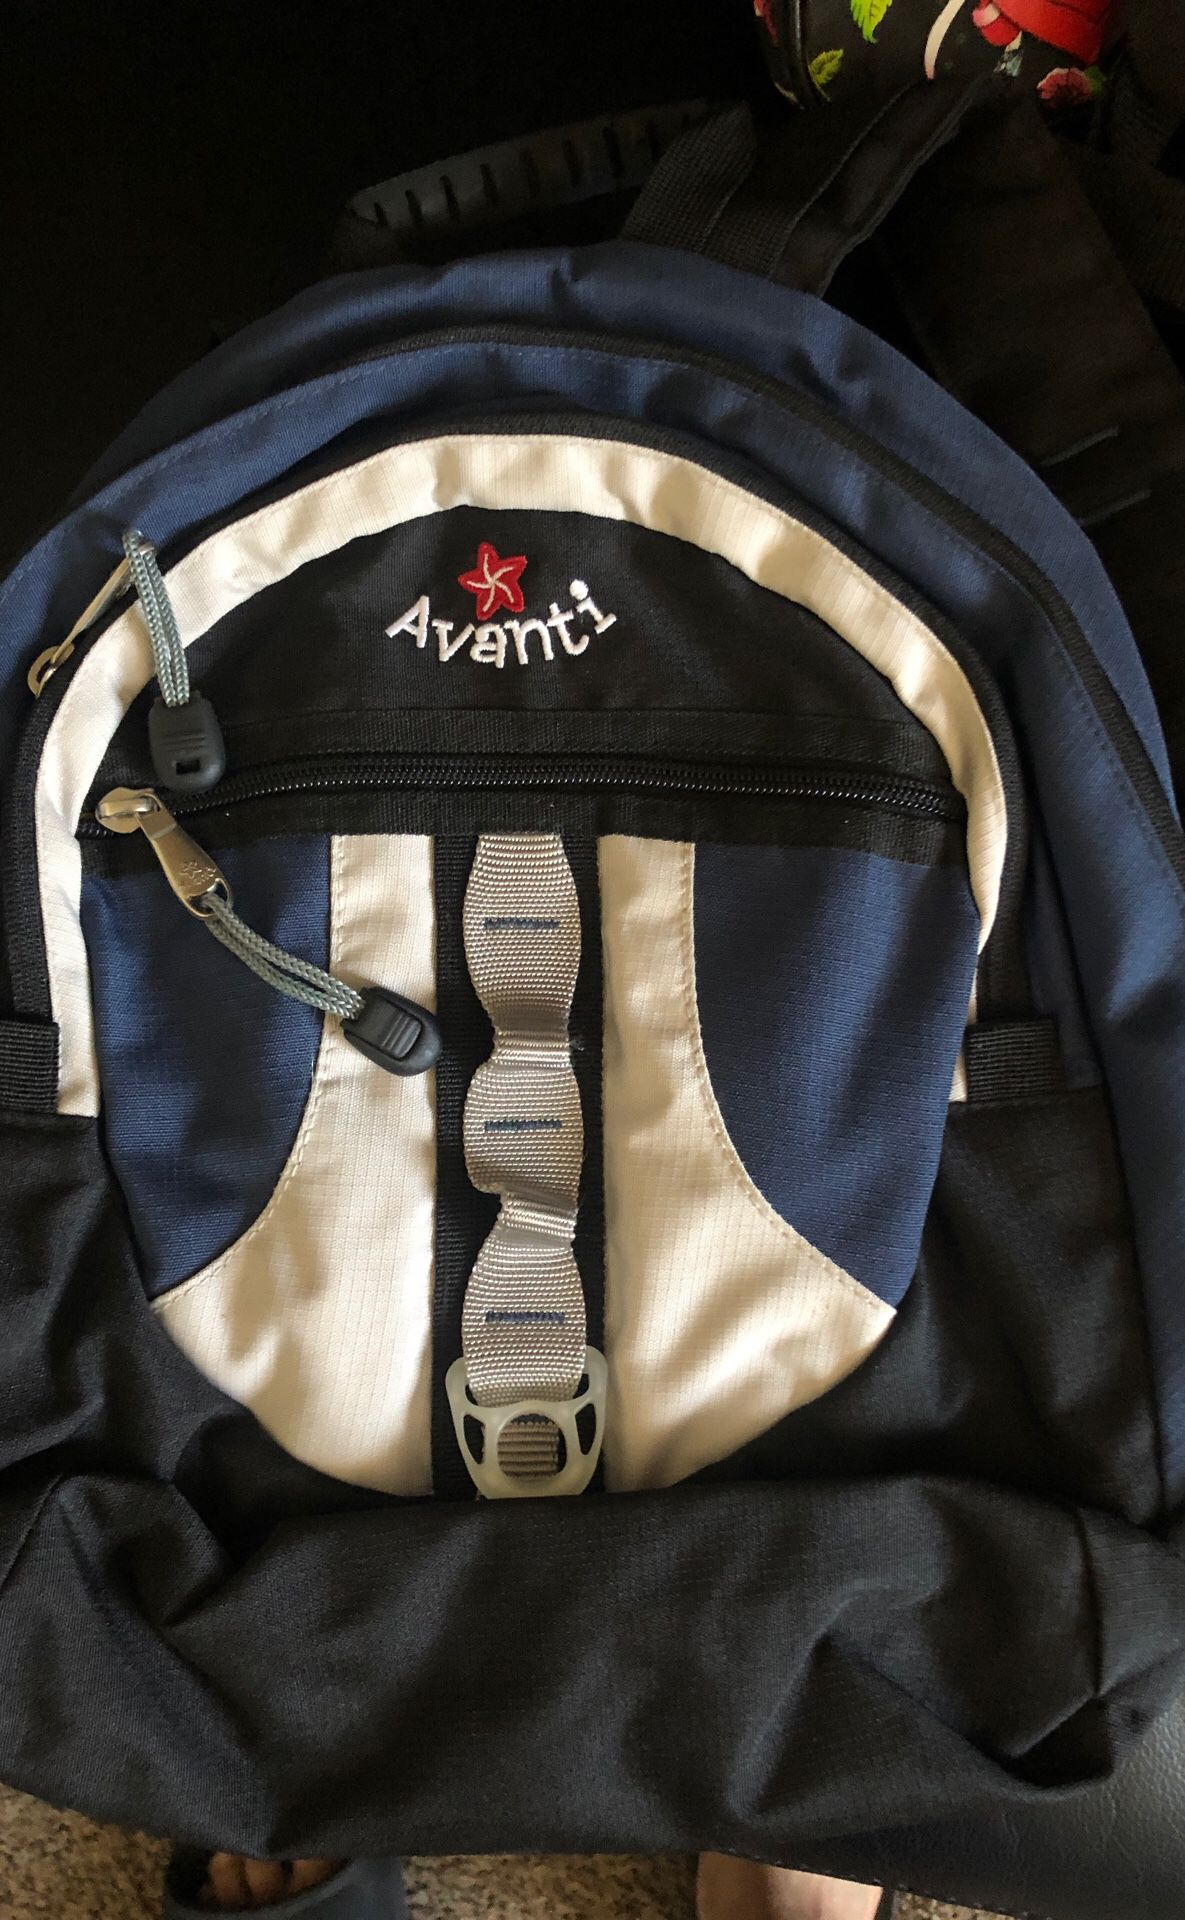 Money Bape backpack for Sale in Las Vegas, NV - OfferUp